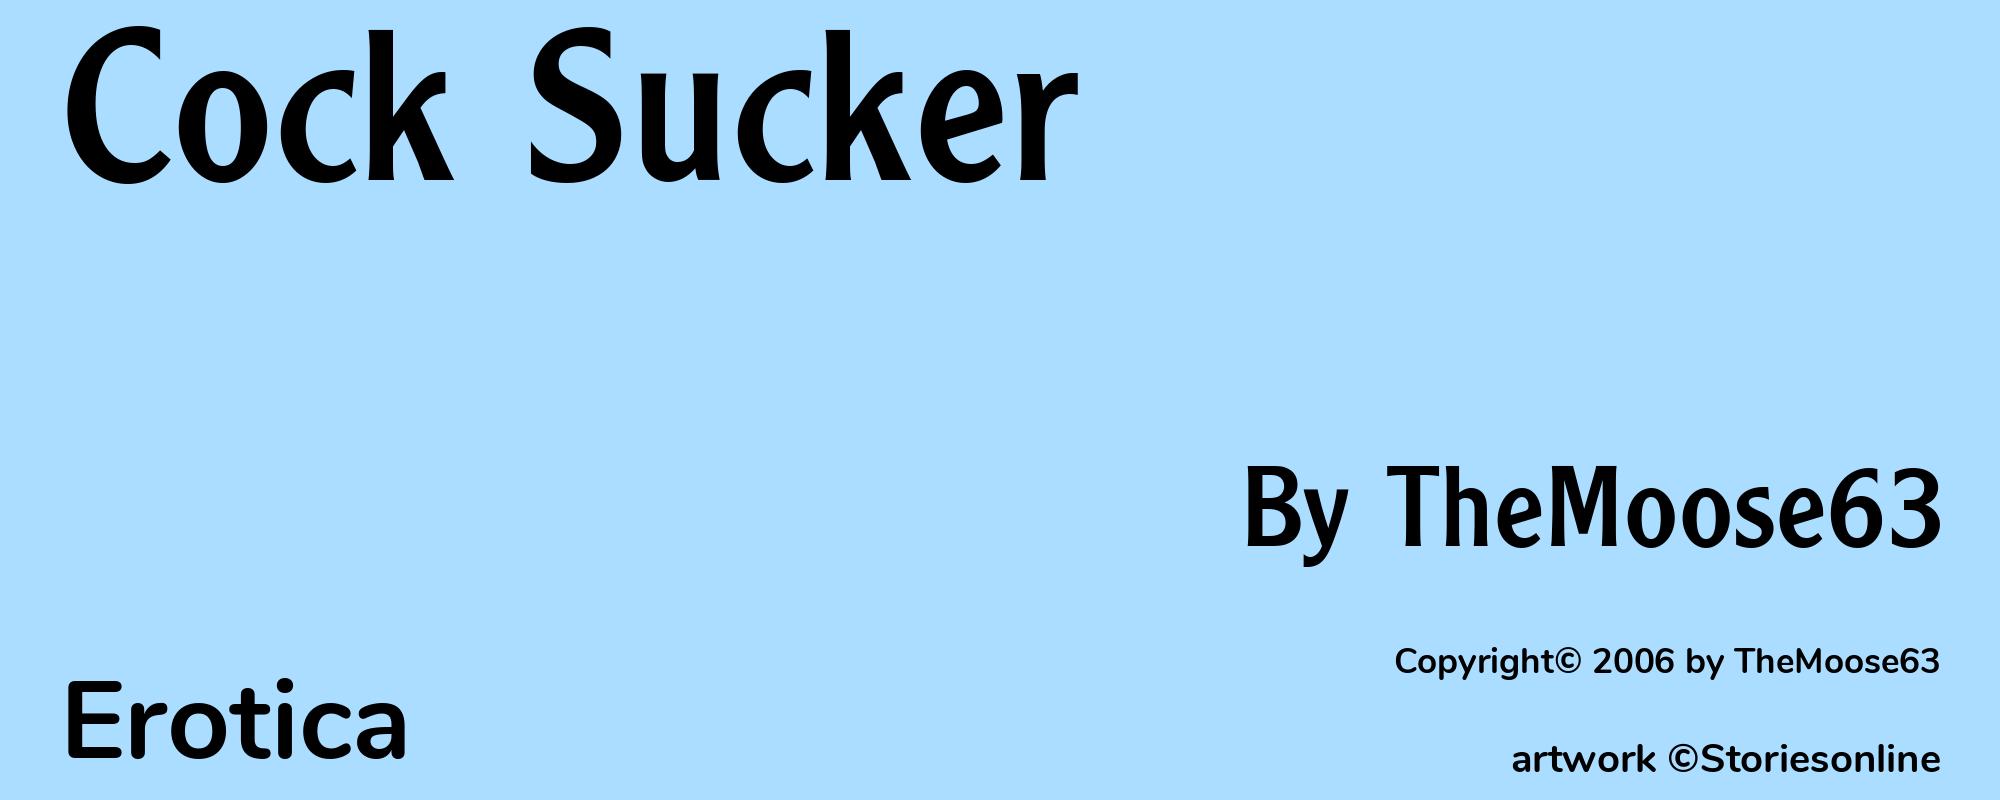 Cock Sucker - Cover